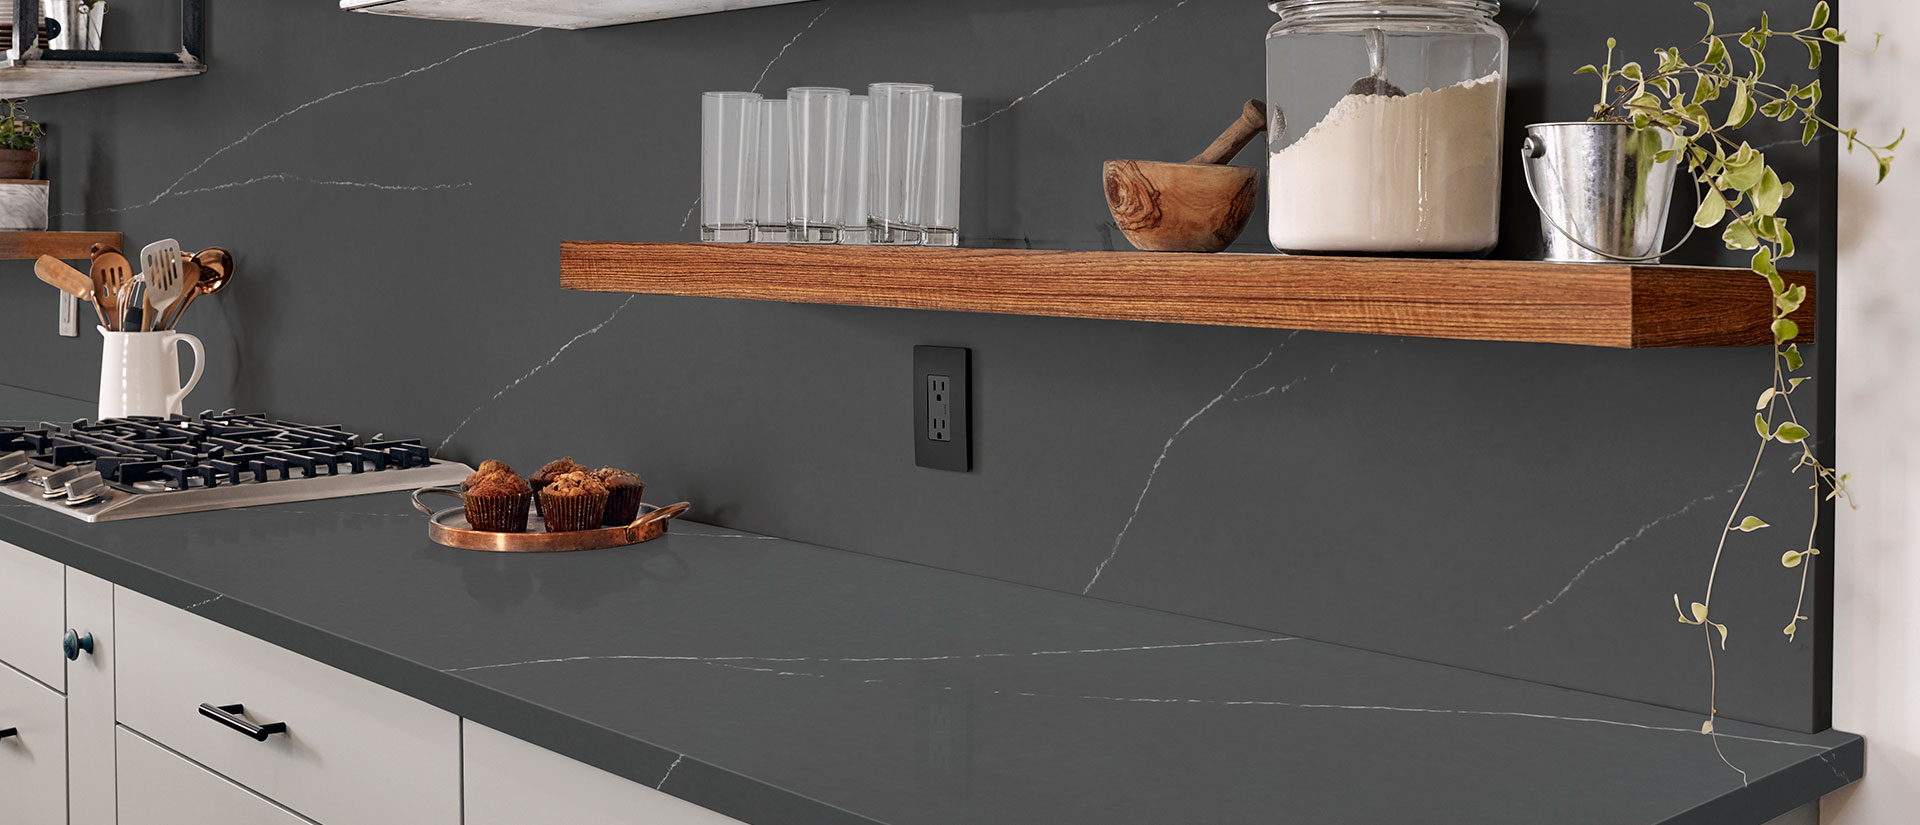 Soapstone Metropolis Quartz countertop in a sleek and contemporary kitchen